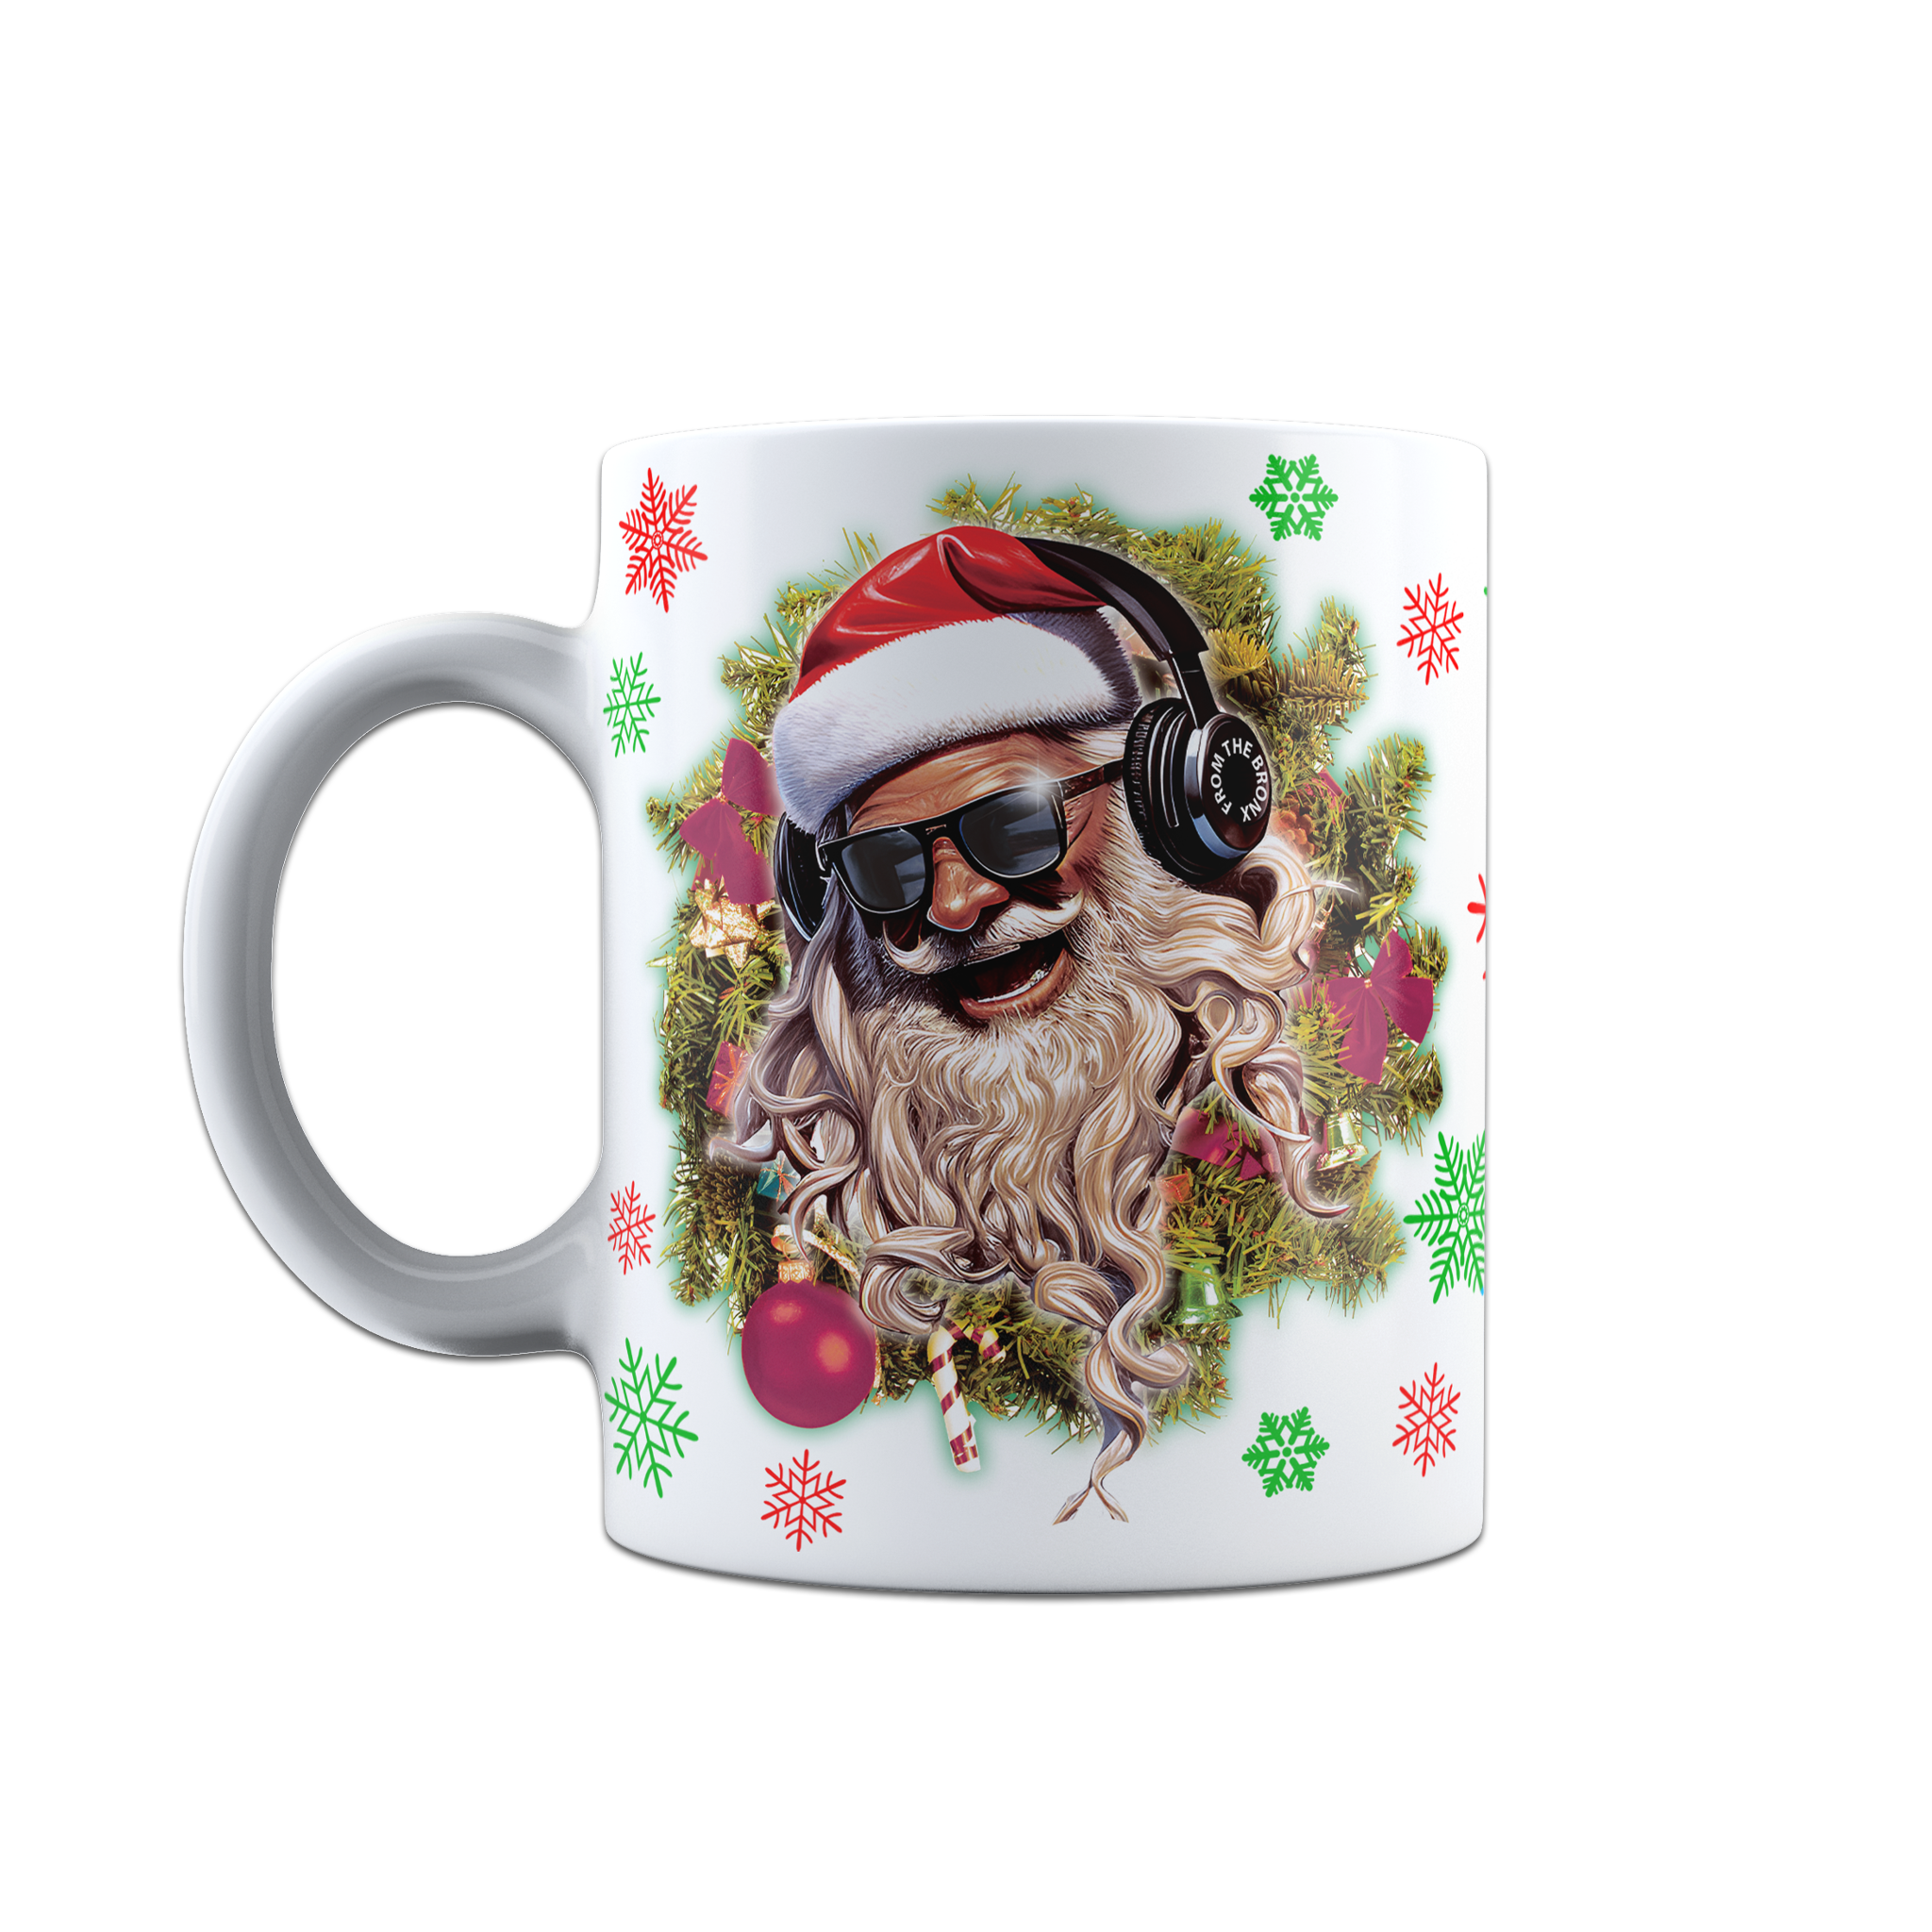 Merry BXmas Holiday Mug Front